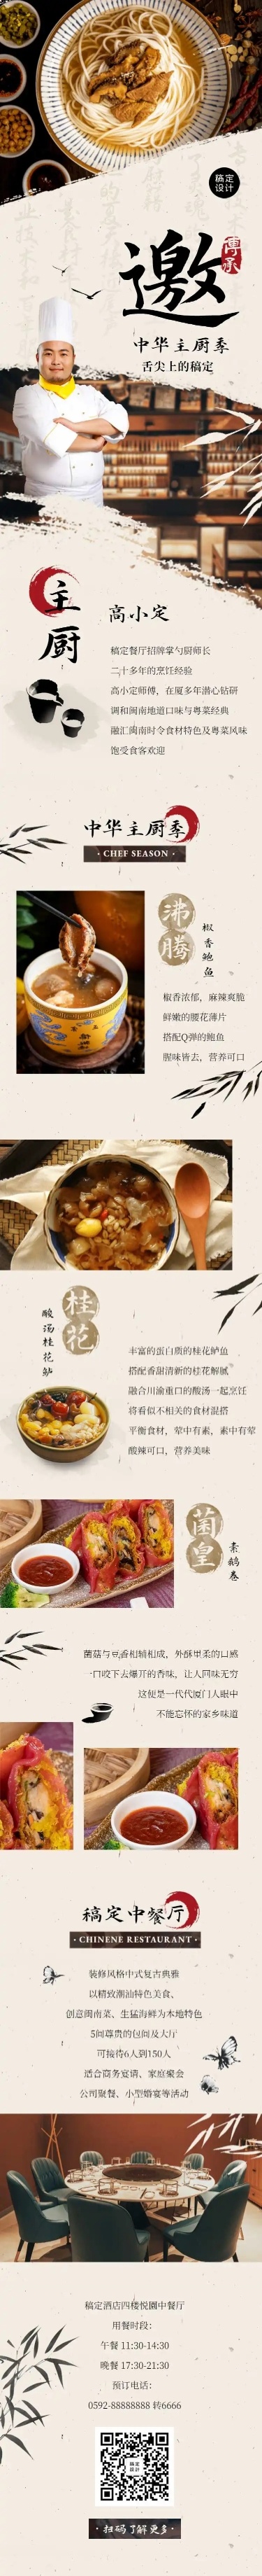 H5长页餐饮宣传页品牌介绍中国风